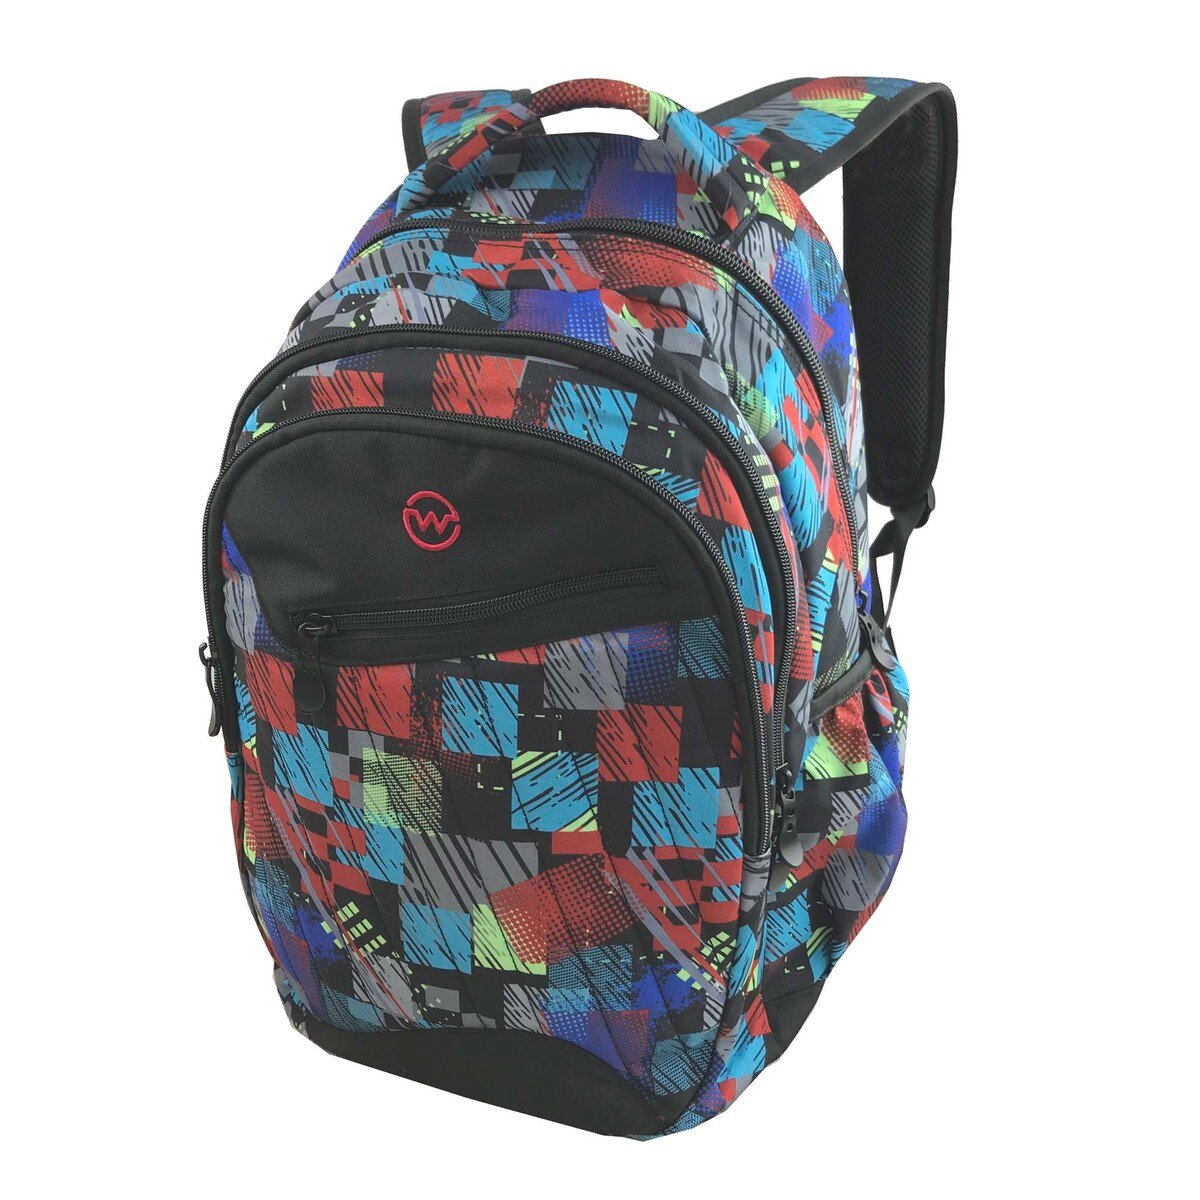 Wagon-R Printed School Backpack B2001-1 19"